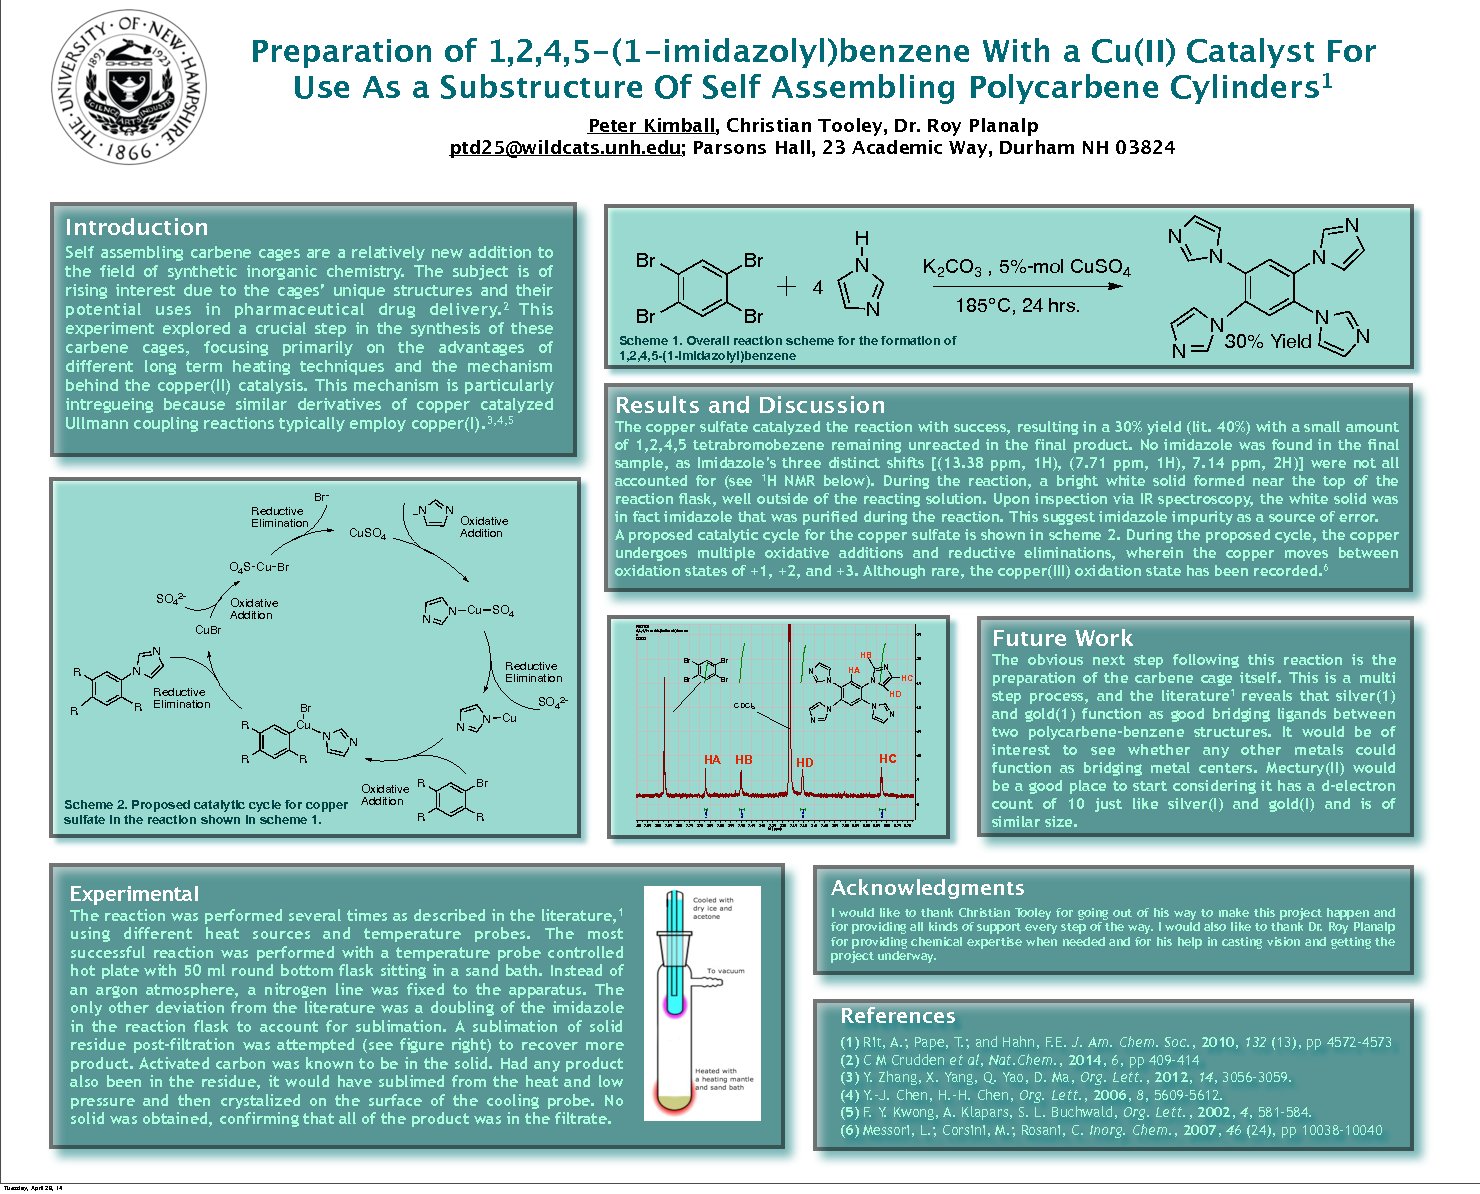 Chem 775 Final Cu(Ii) Catalyst. by ptd25